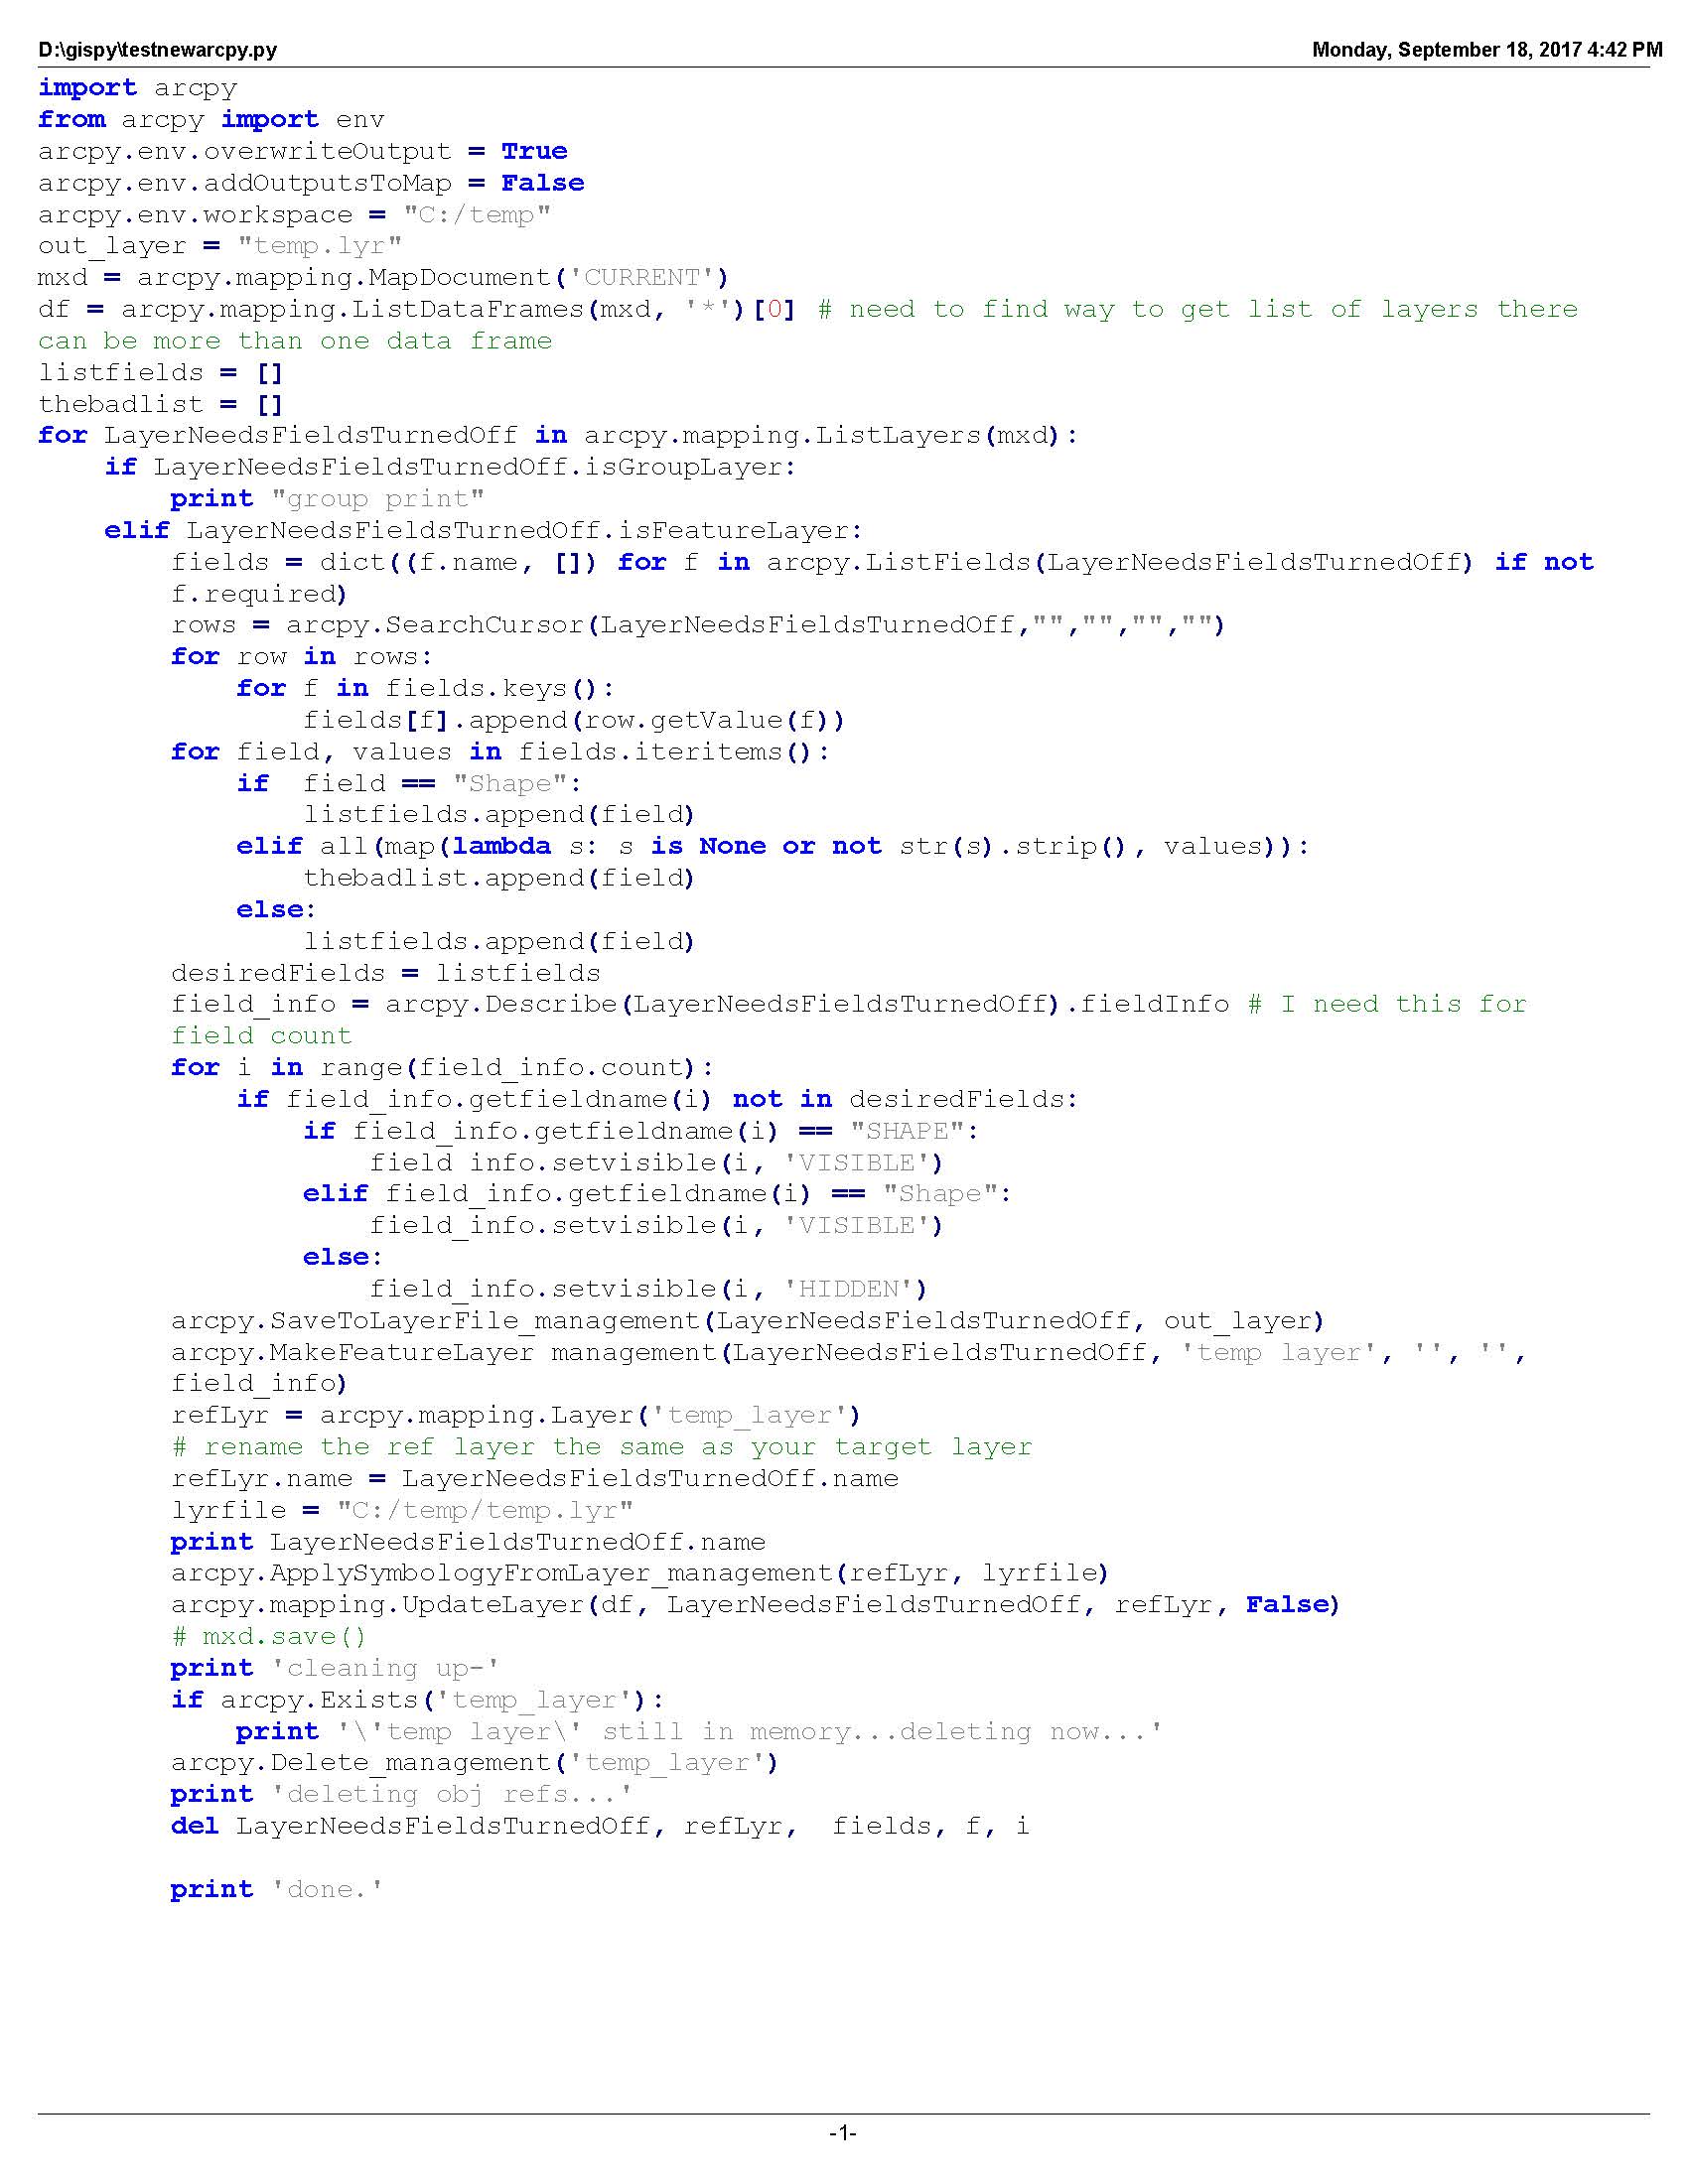 script code